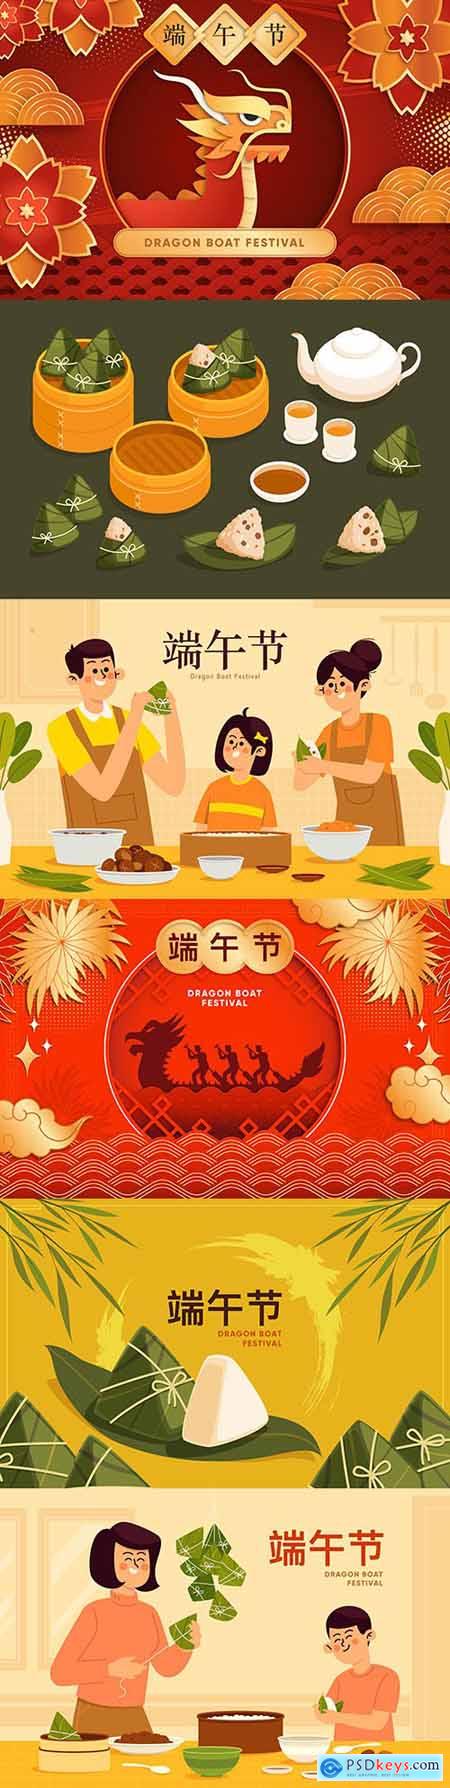 Chinese dragon boat festival design illustration 4